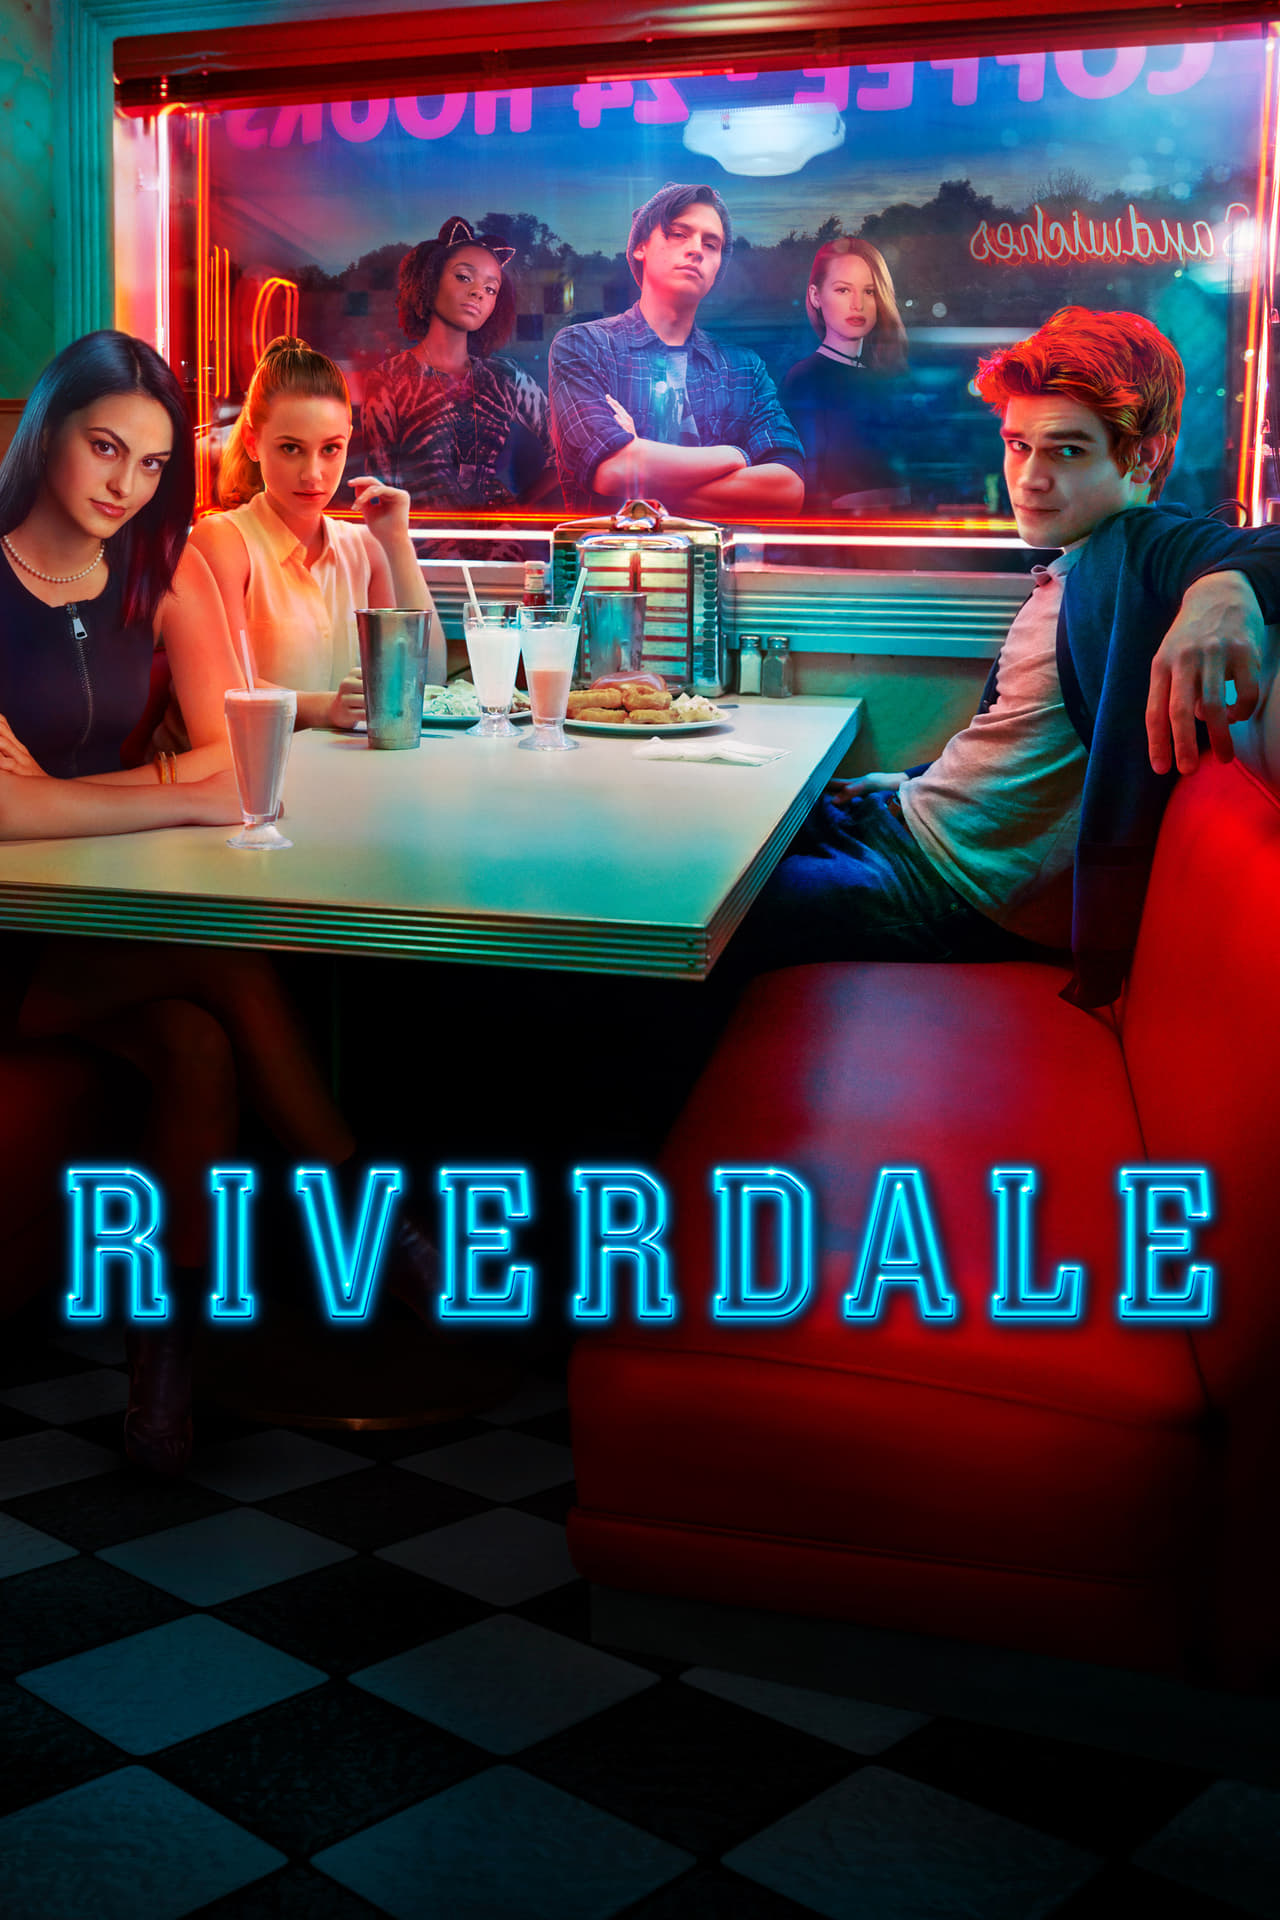 riverdale season 1 subtitles download